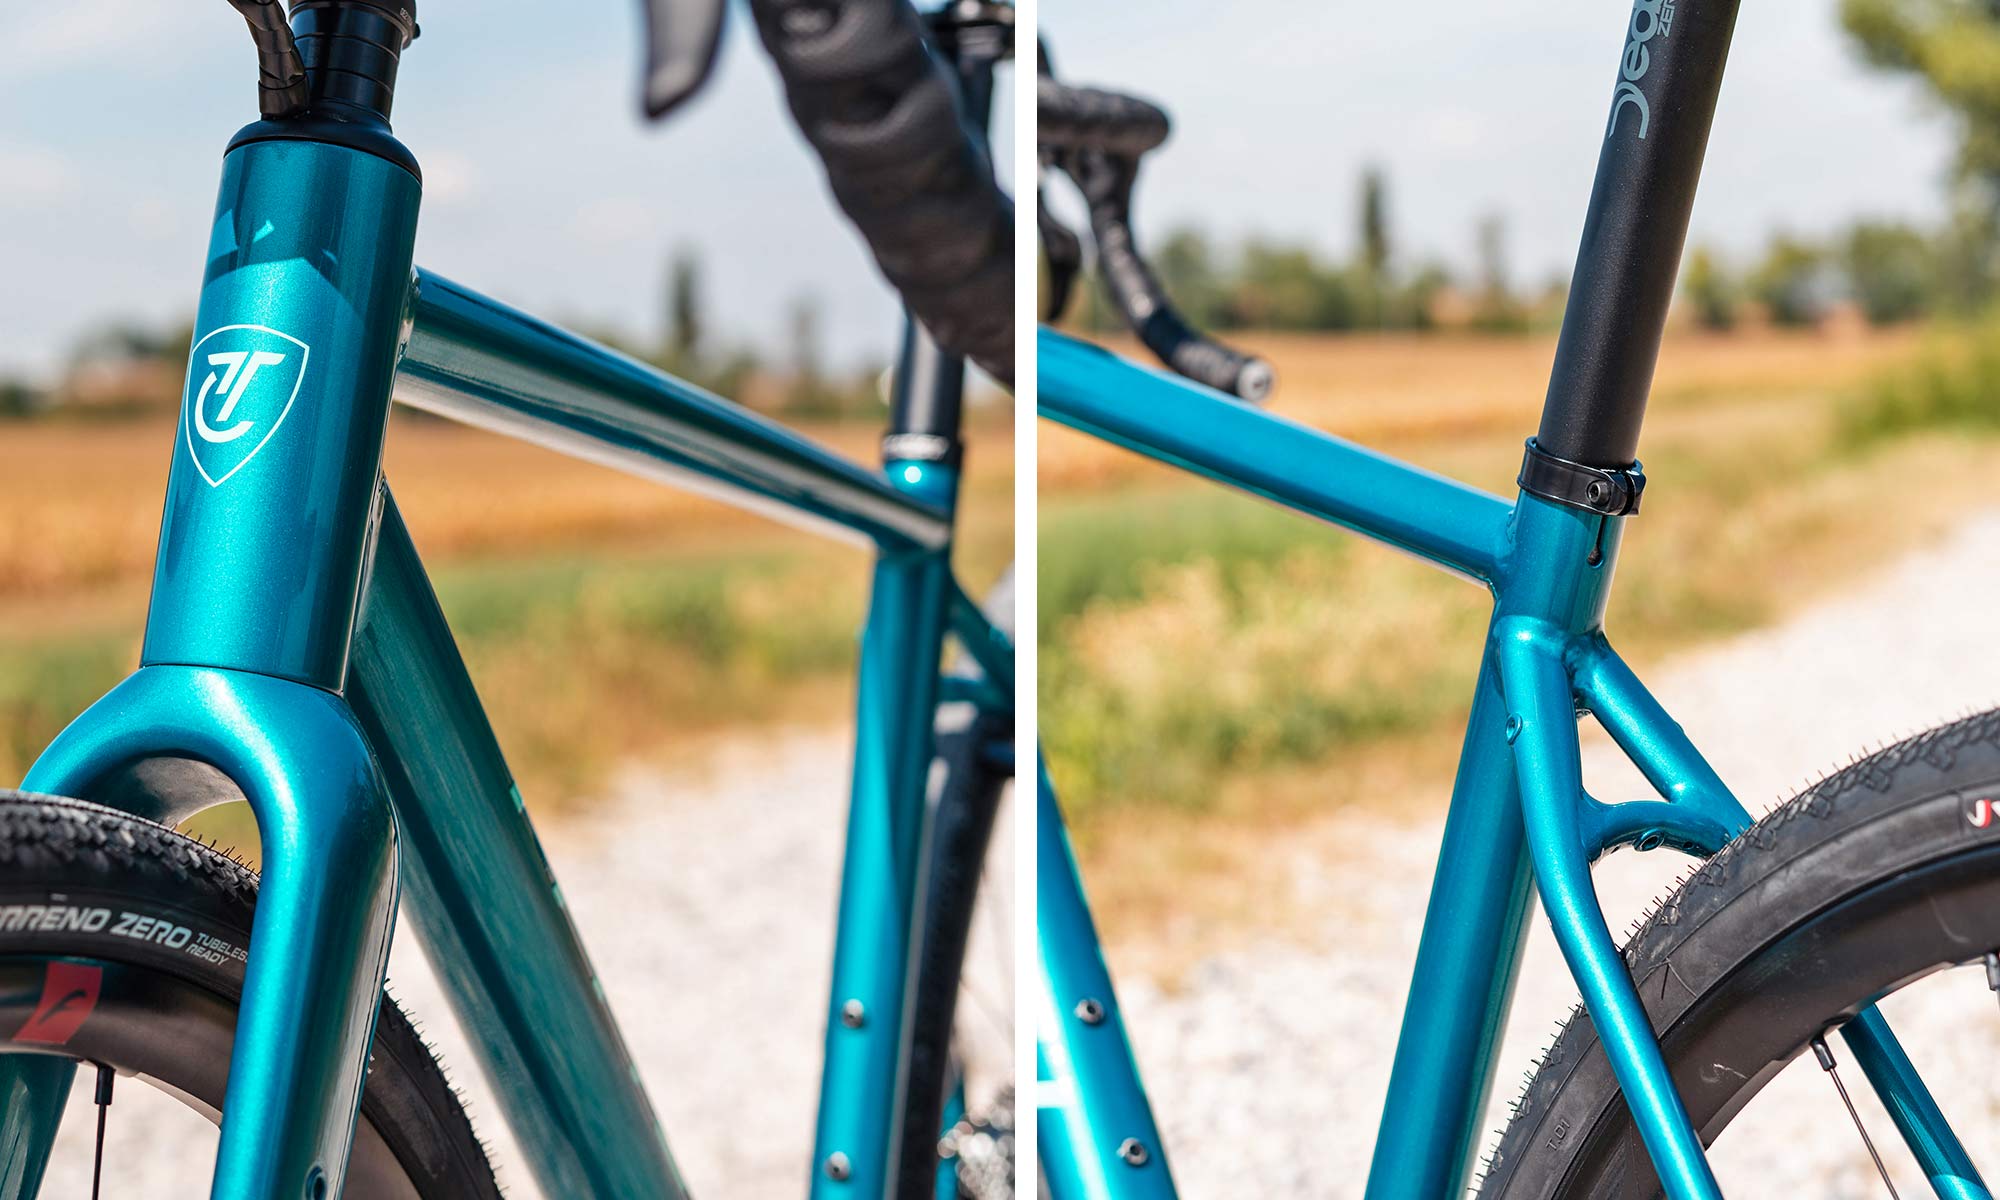 Titici All-In aluminum gravel bike, integrated custom alloy bike made-in-Italy, photo by Mattia Ragni, frame details